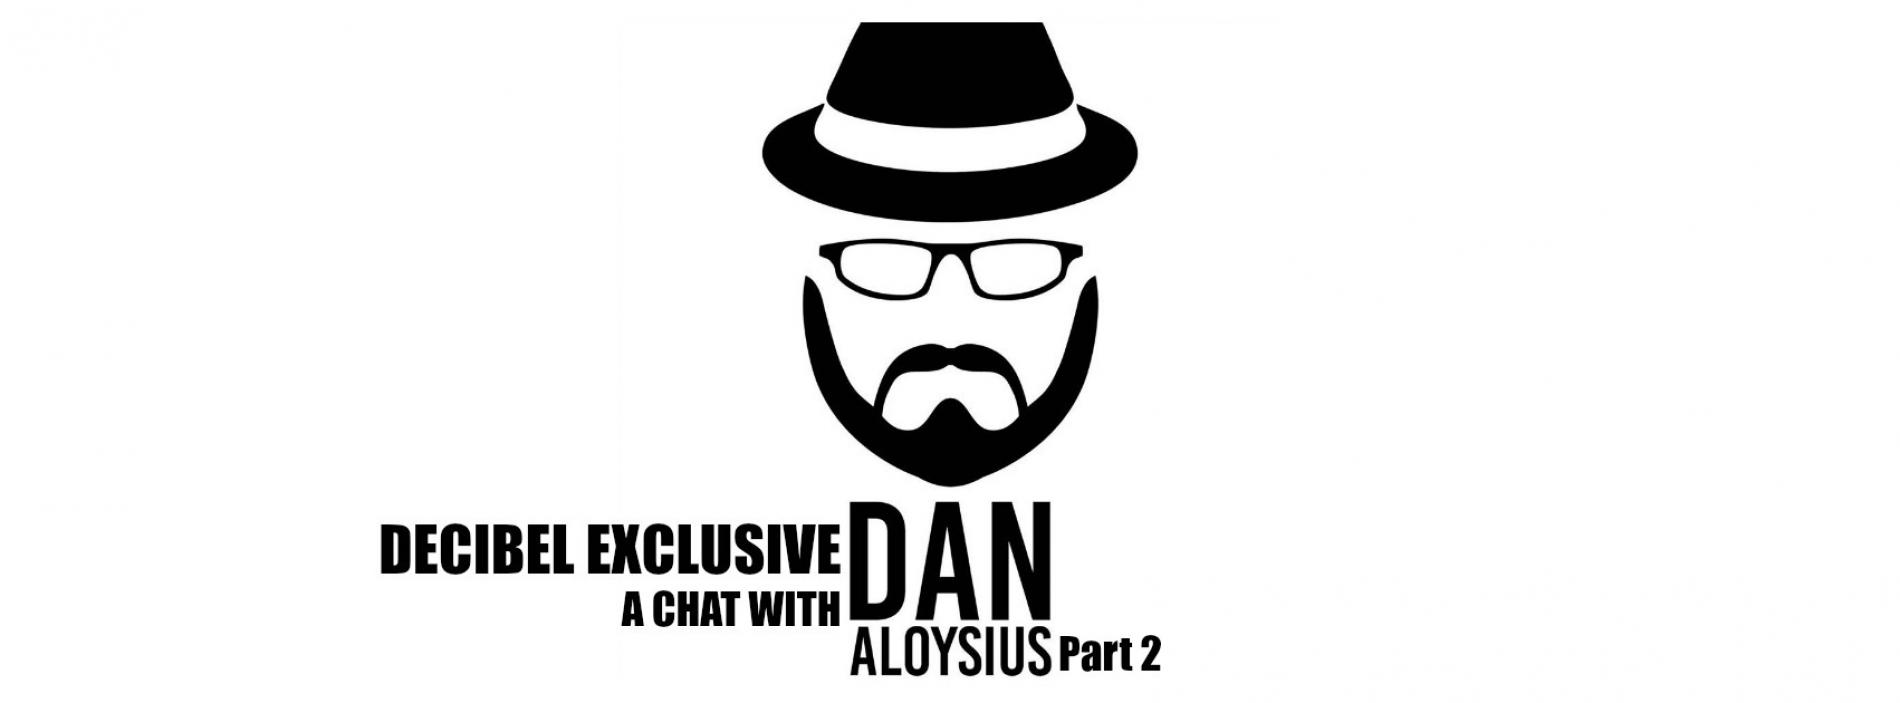 Decibel Exclusive : A Chat With Dan Aloysius (Part 2)